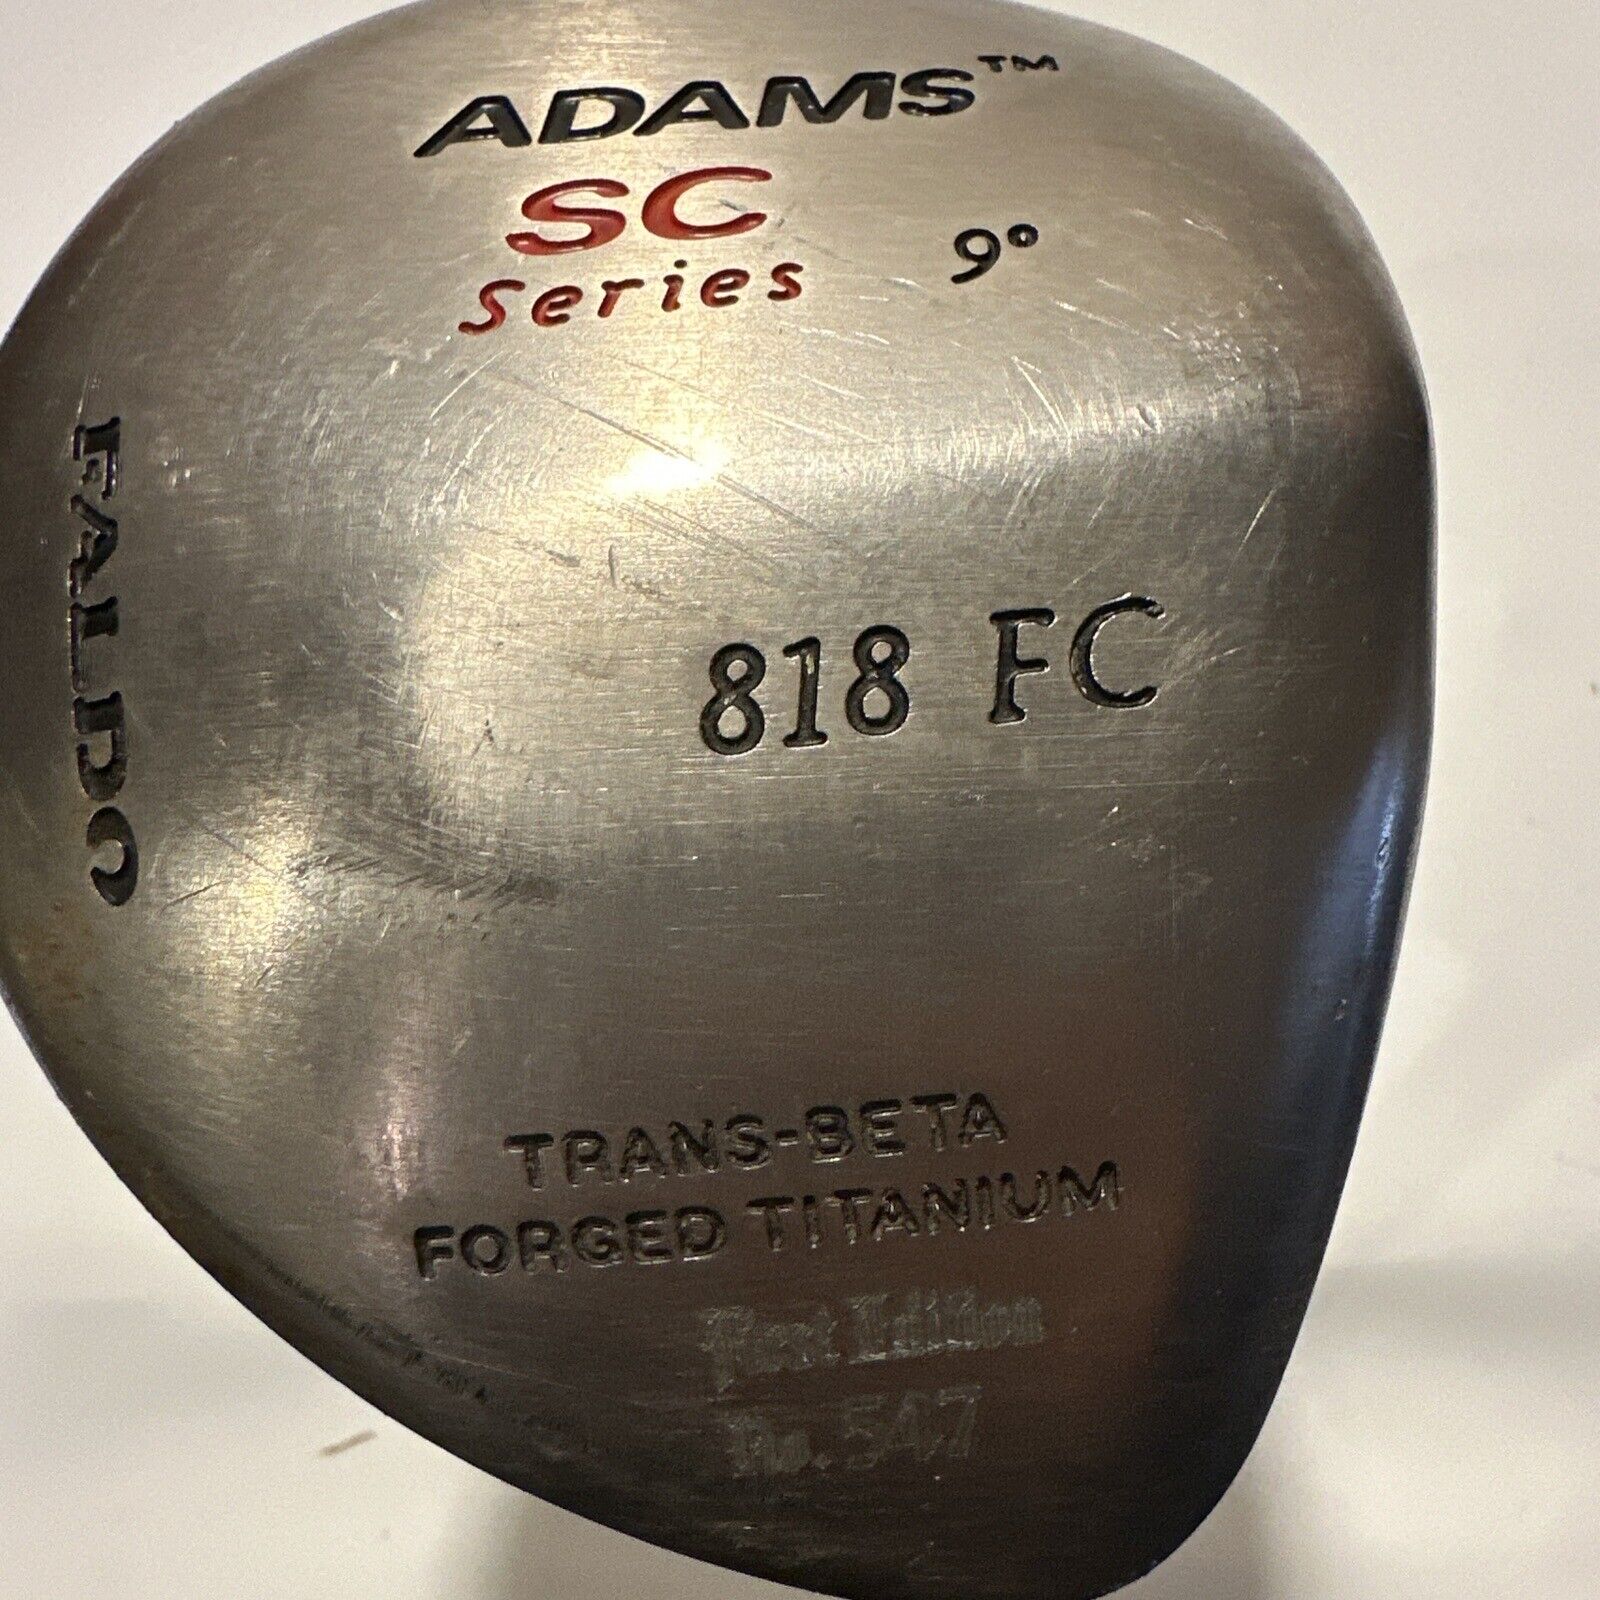 Adams SC 818FC Driver 9 Trans-beta Forged Titanium First Edition Super Shaft